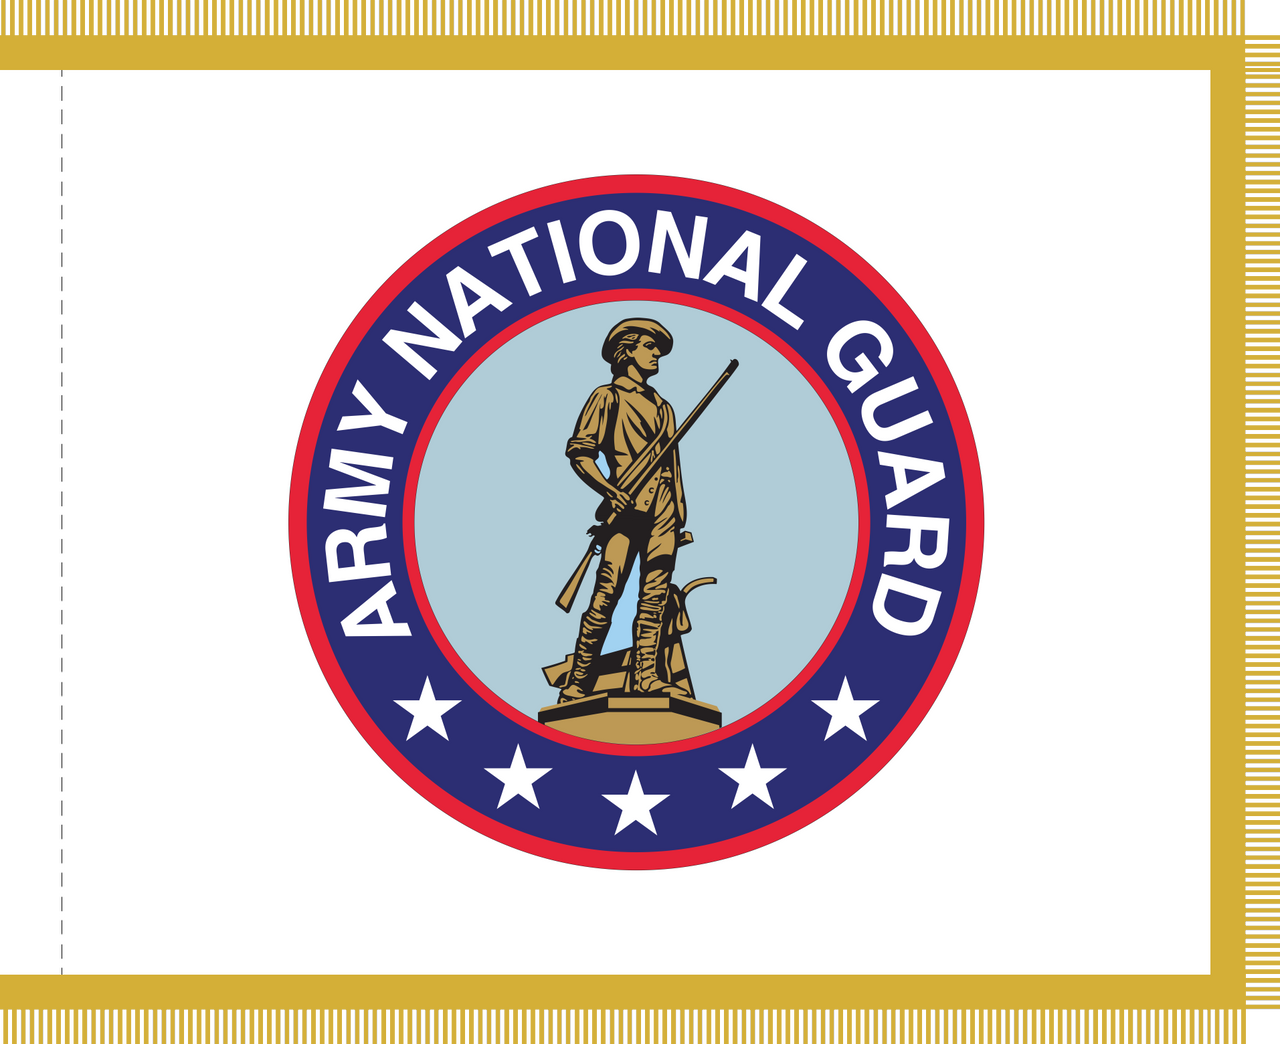 US Army National Guard Flag, Indoor Nylon, Size 4'4" x 5'6", with Pole Hem and Gold Fringe